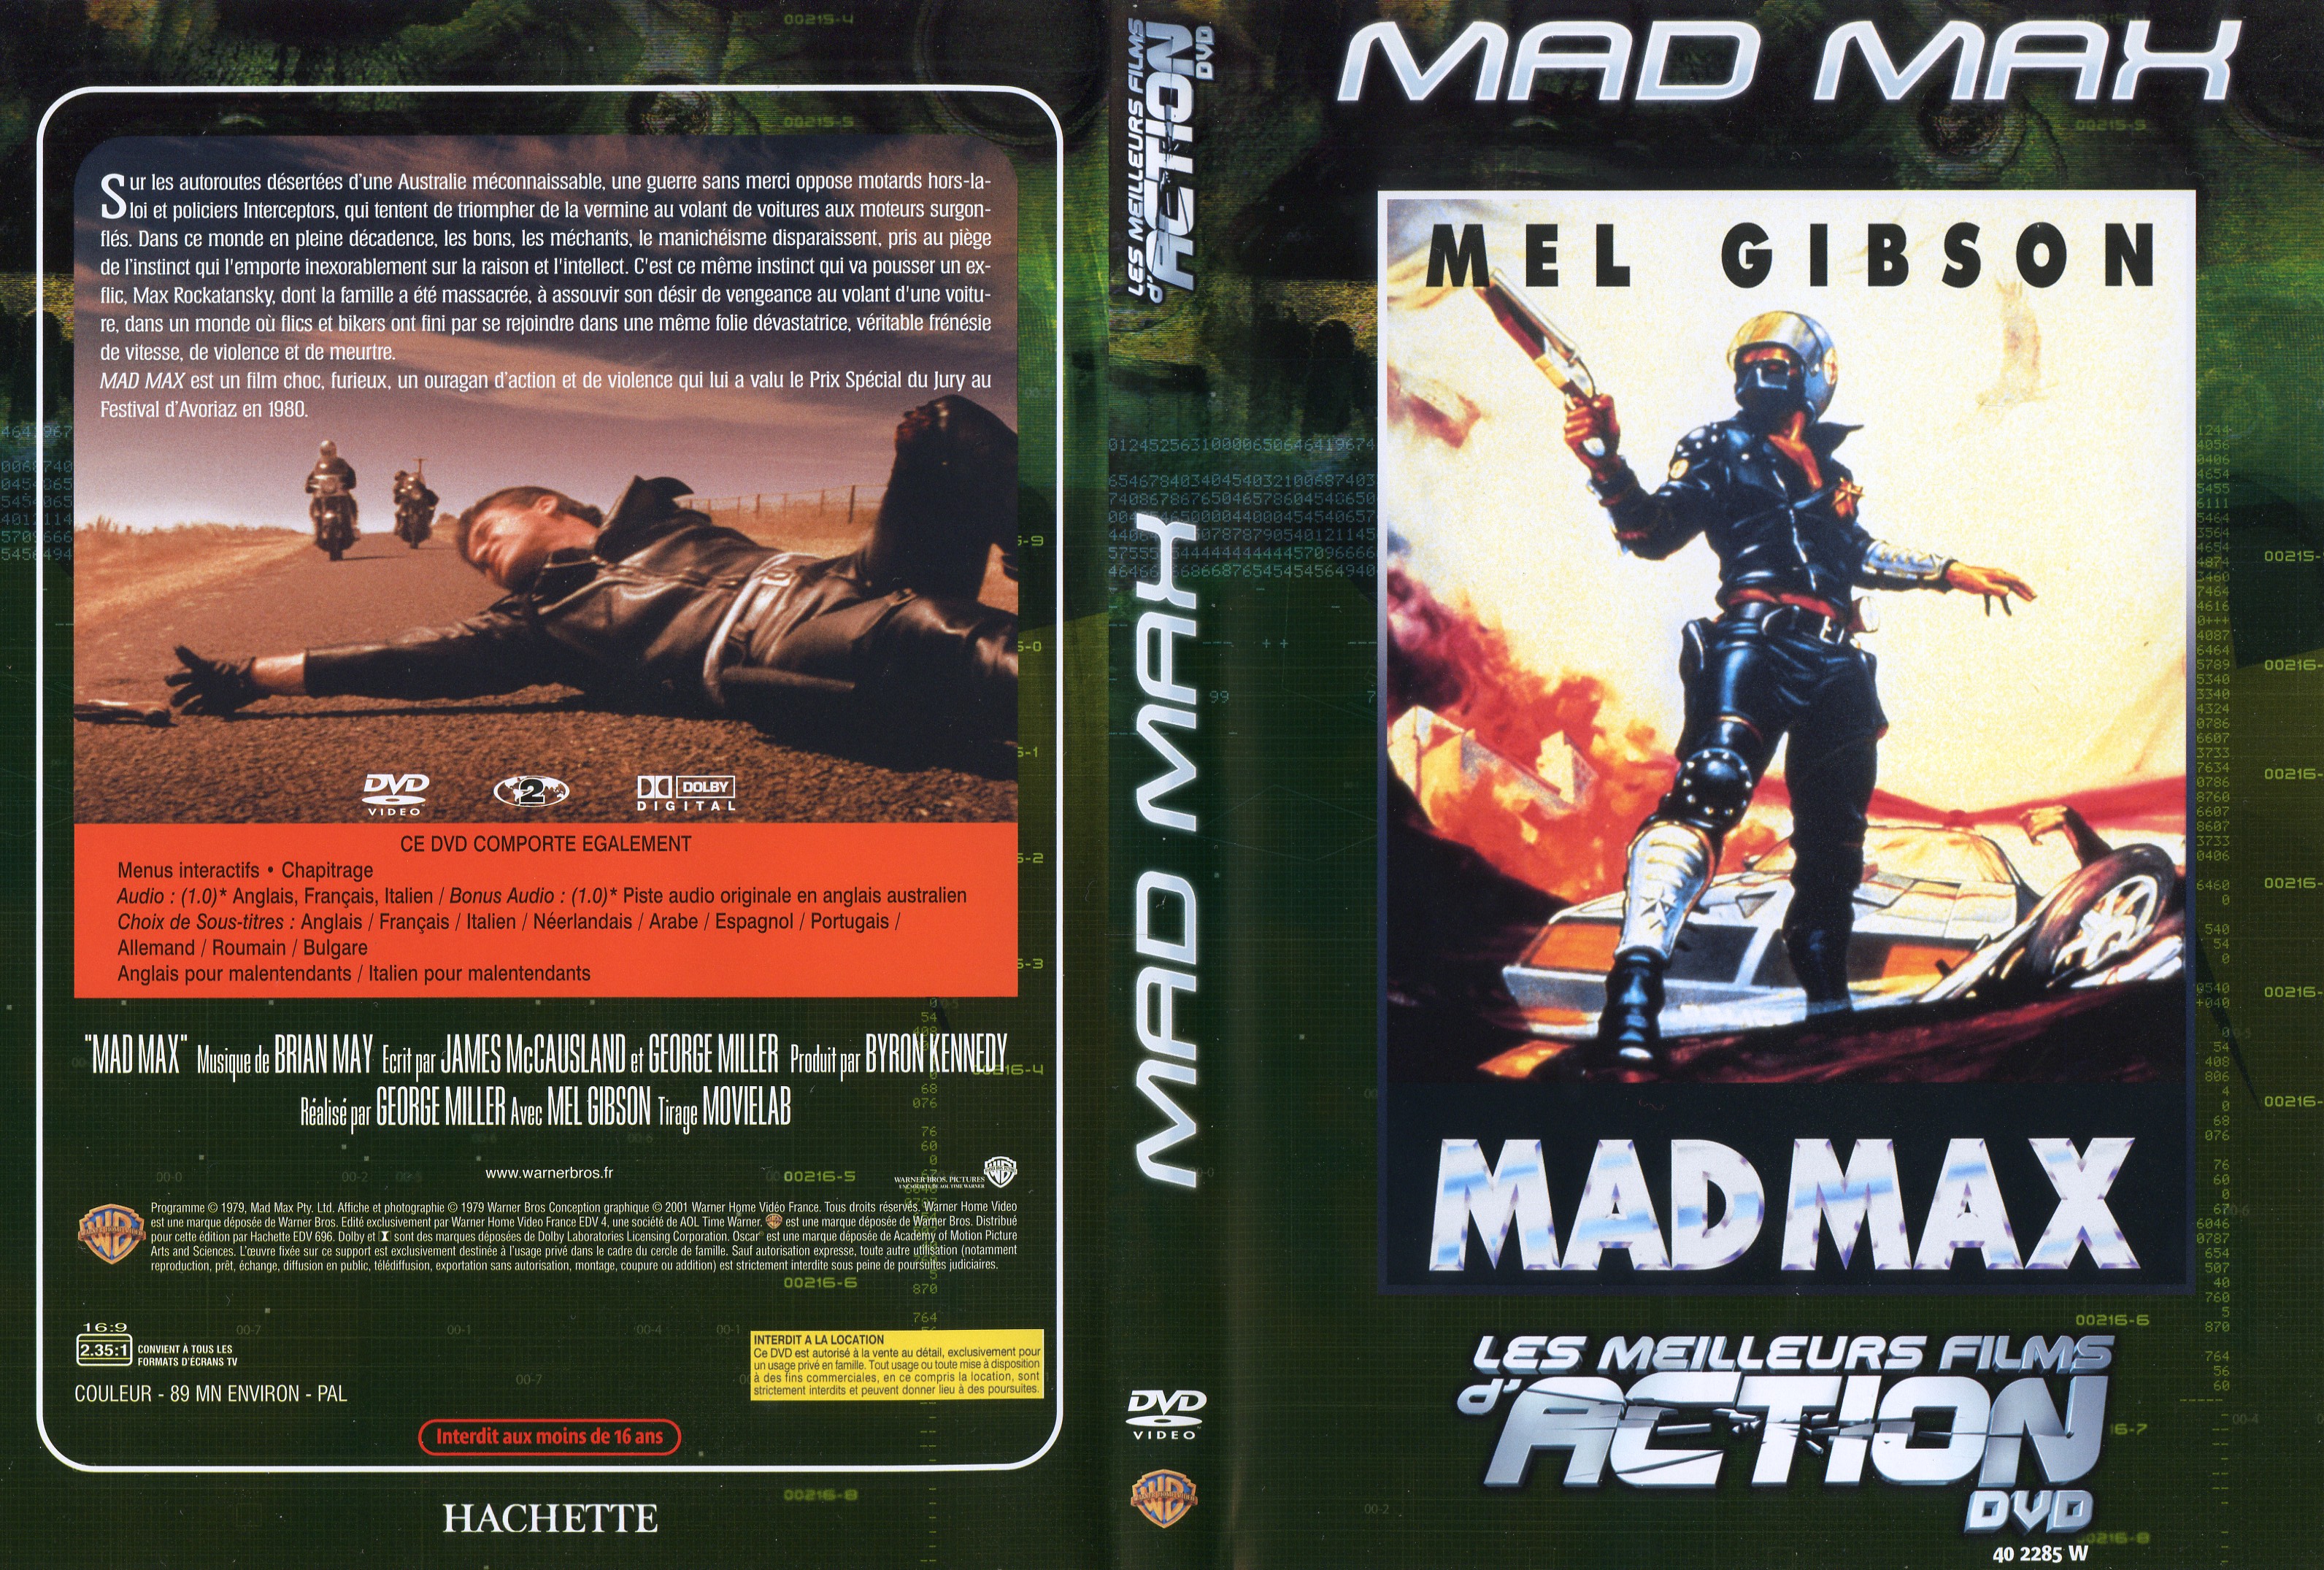 Jaquette DVD Mad Max v2